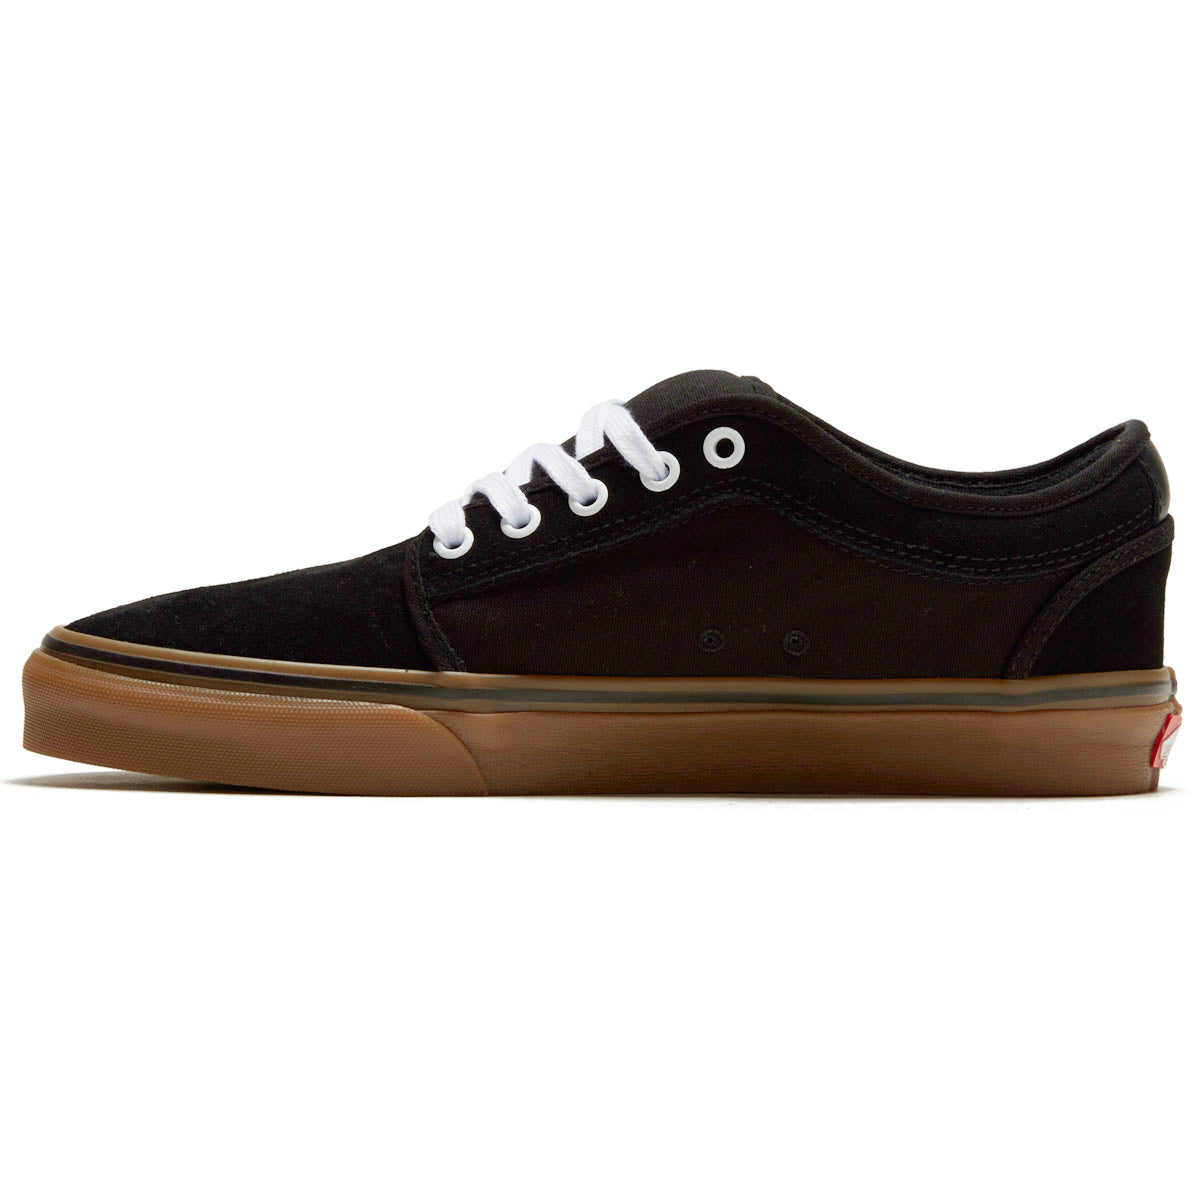 Vans Skate Chukka Low Shoes - Black/Black/Gum image 2